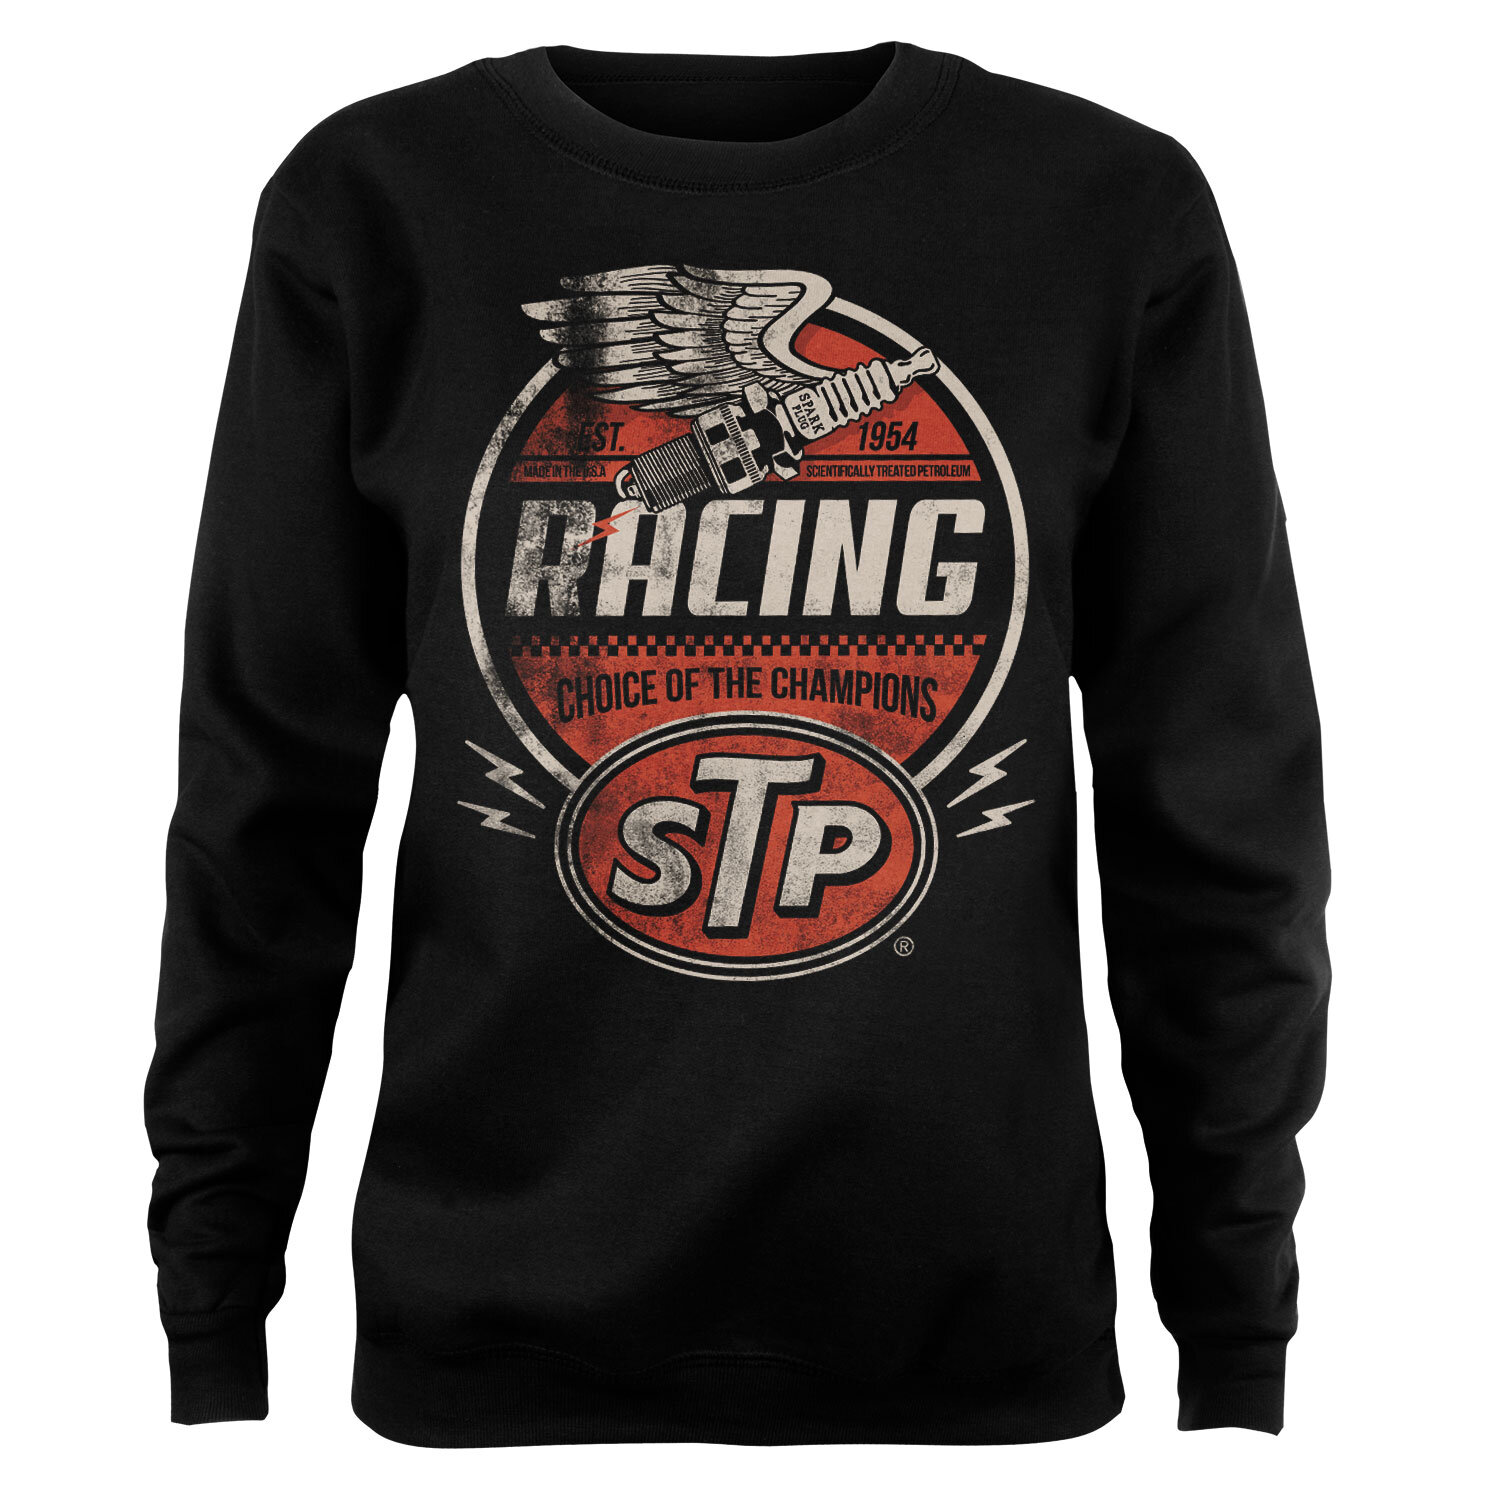 STP Vintage Racing Girly Sweatshirt